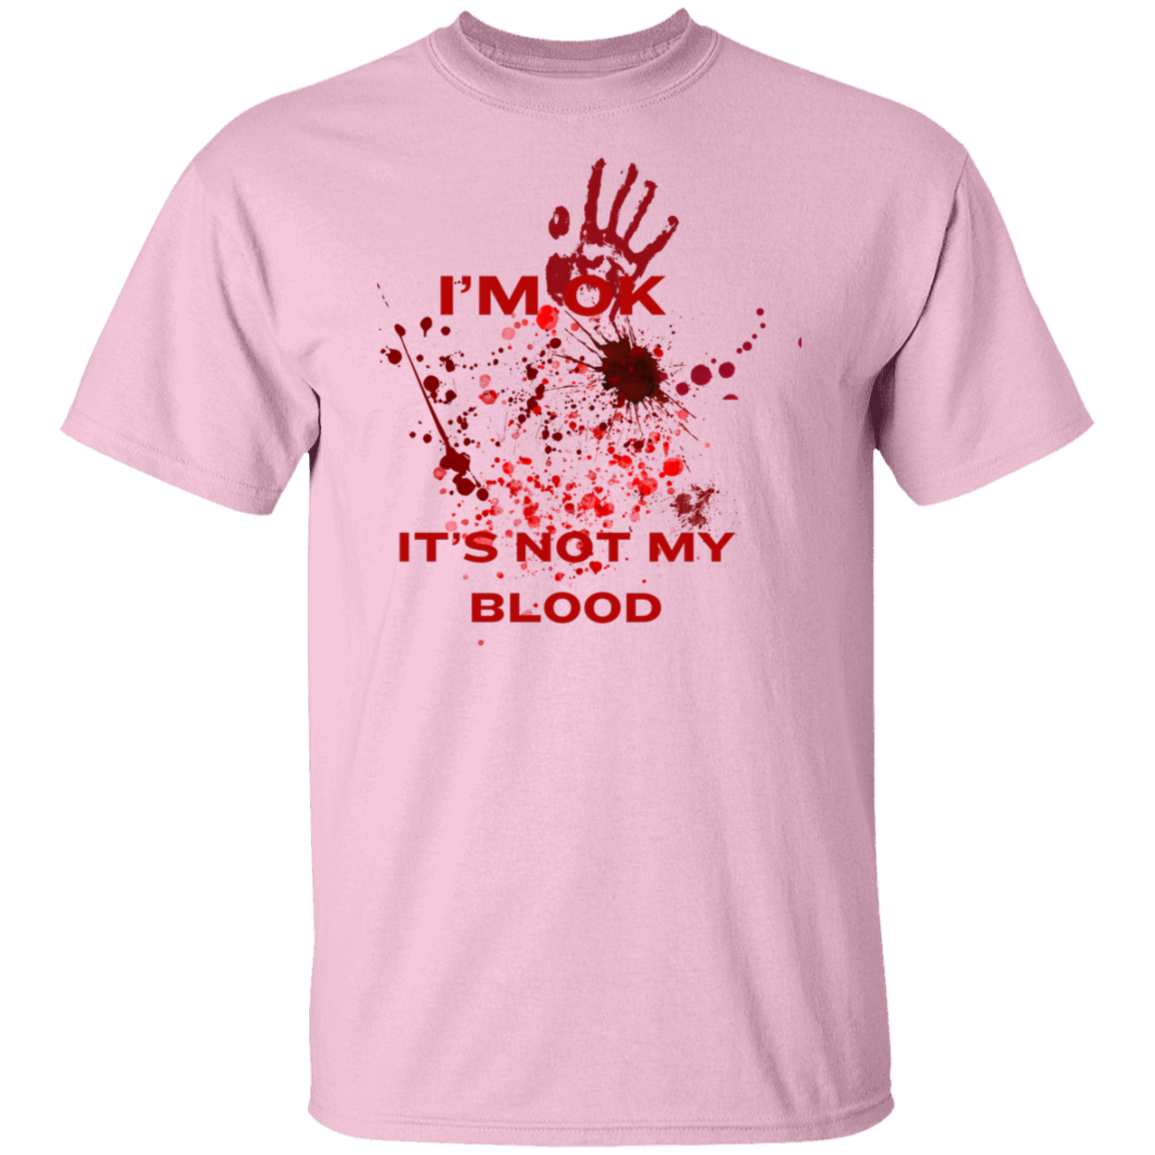 I’M OK IT'S NOT MY BLOOD T-Shirt